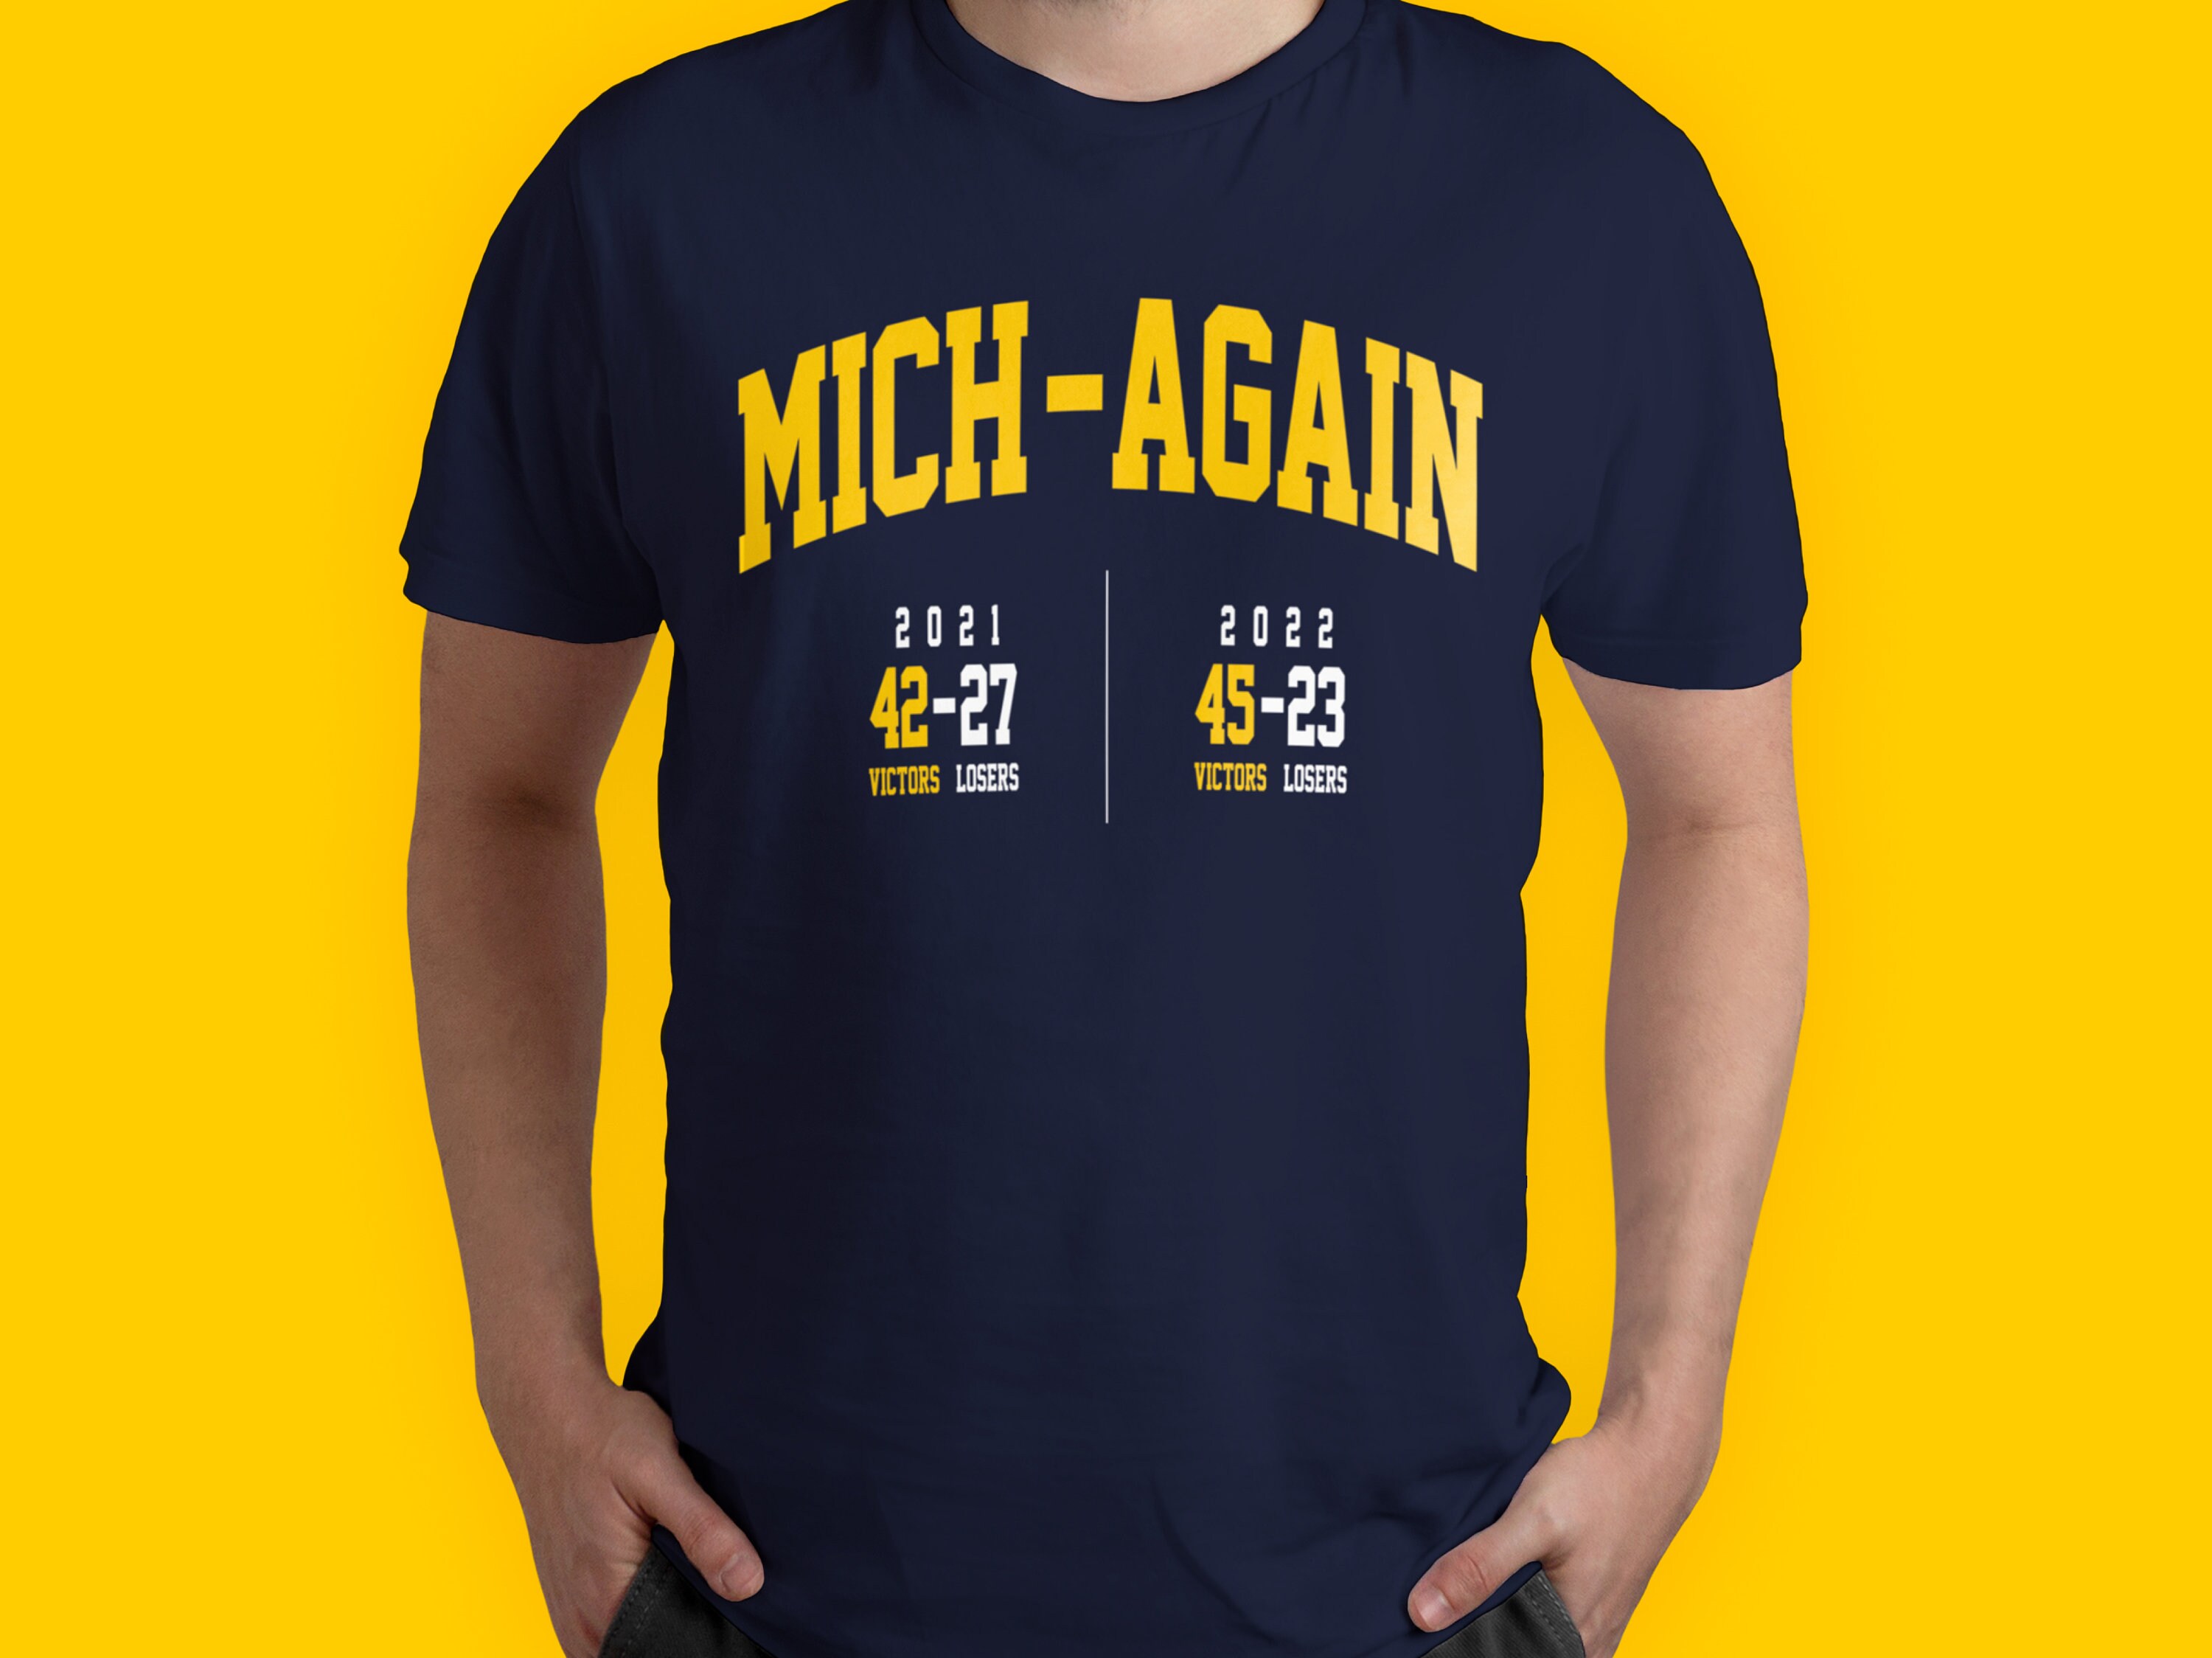 Michigan Football Tshirt, 2022, University, Mich-Again